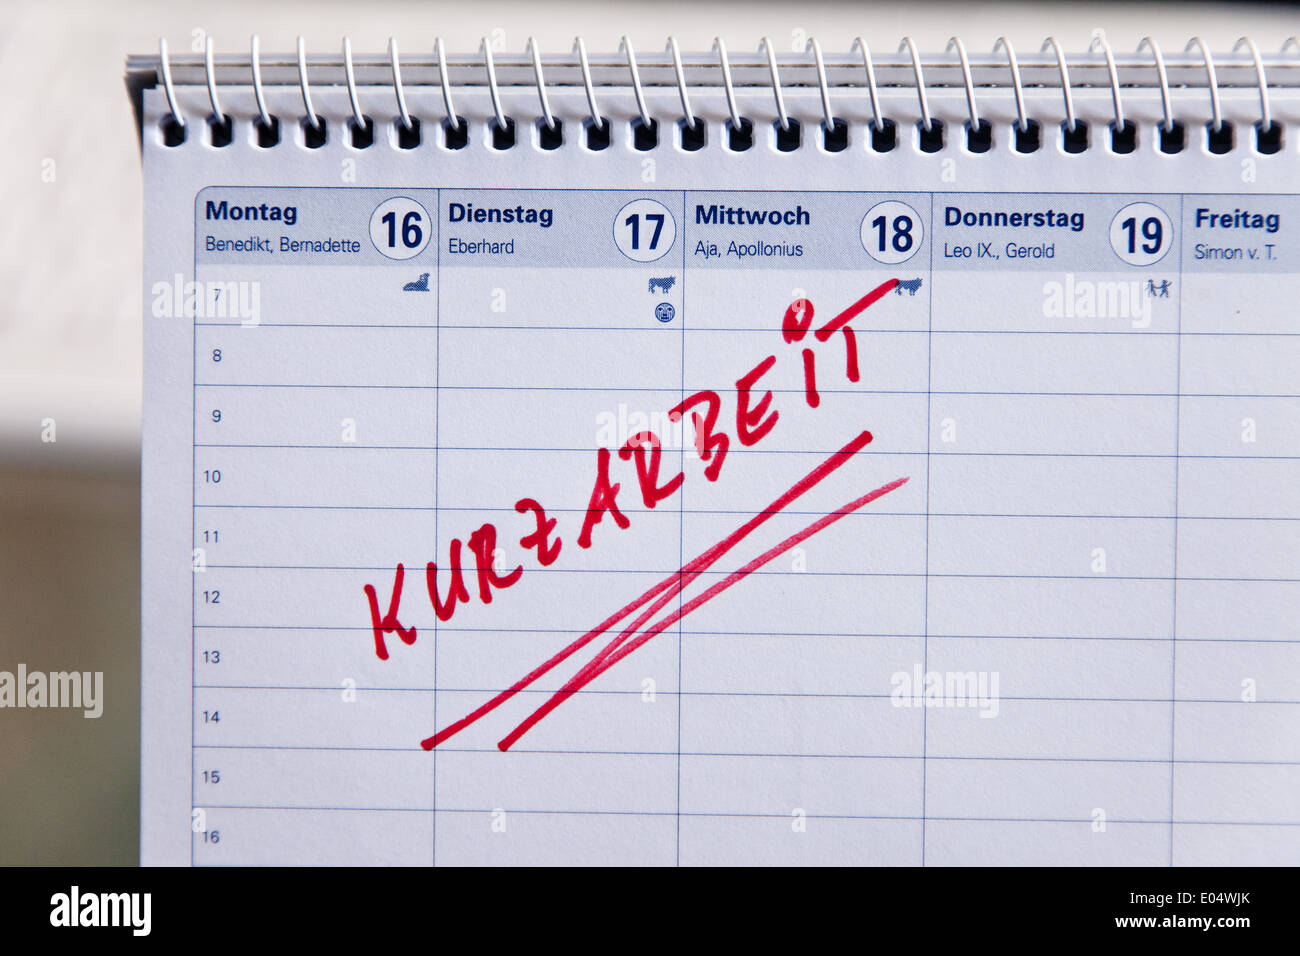 Appointment short time entry in one month of calendar, Termin Kurzarbeit Eintrag in einem Monats Kalender Stock Photo